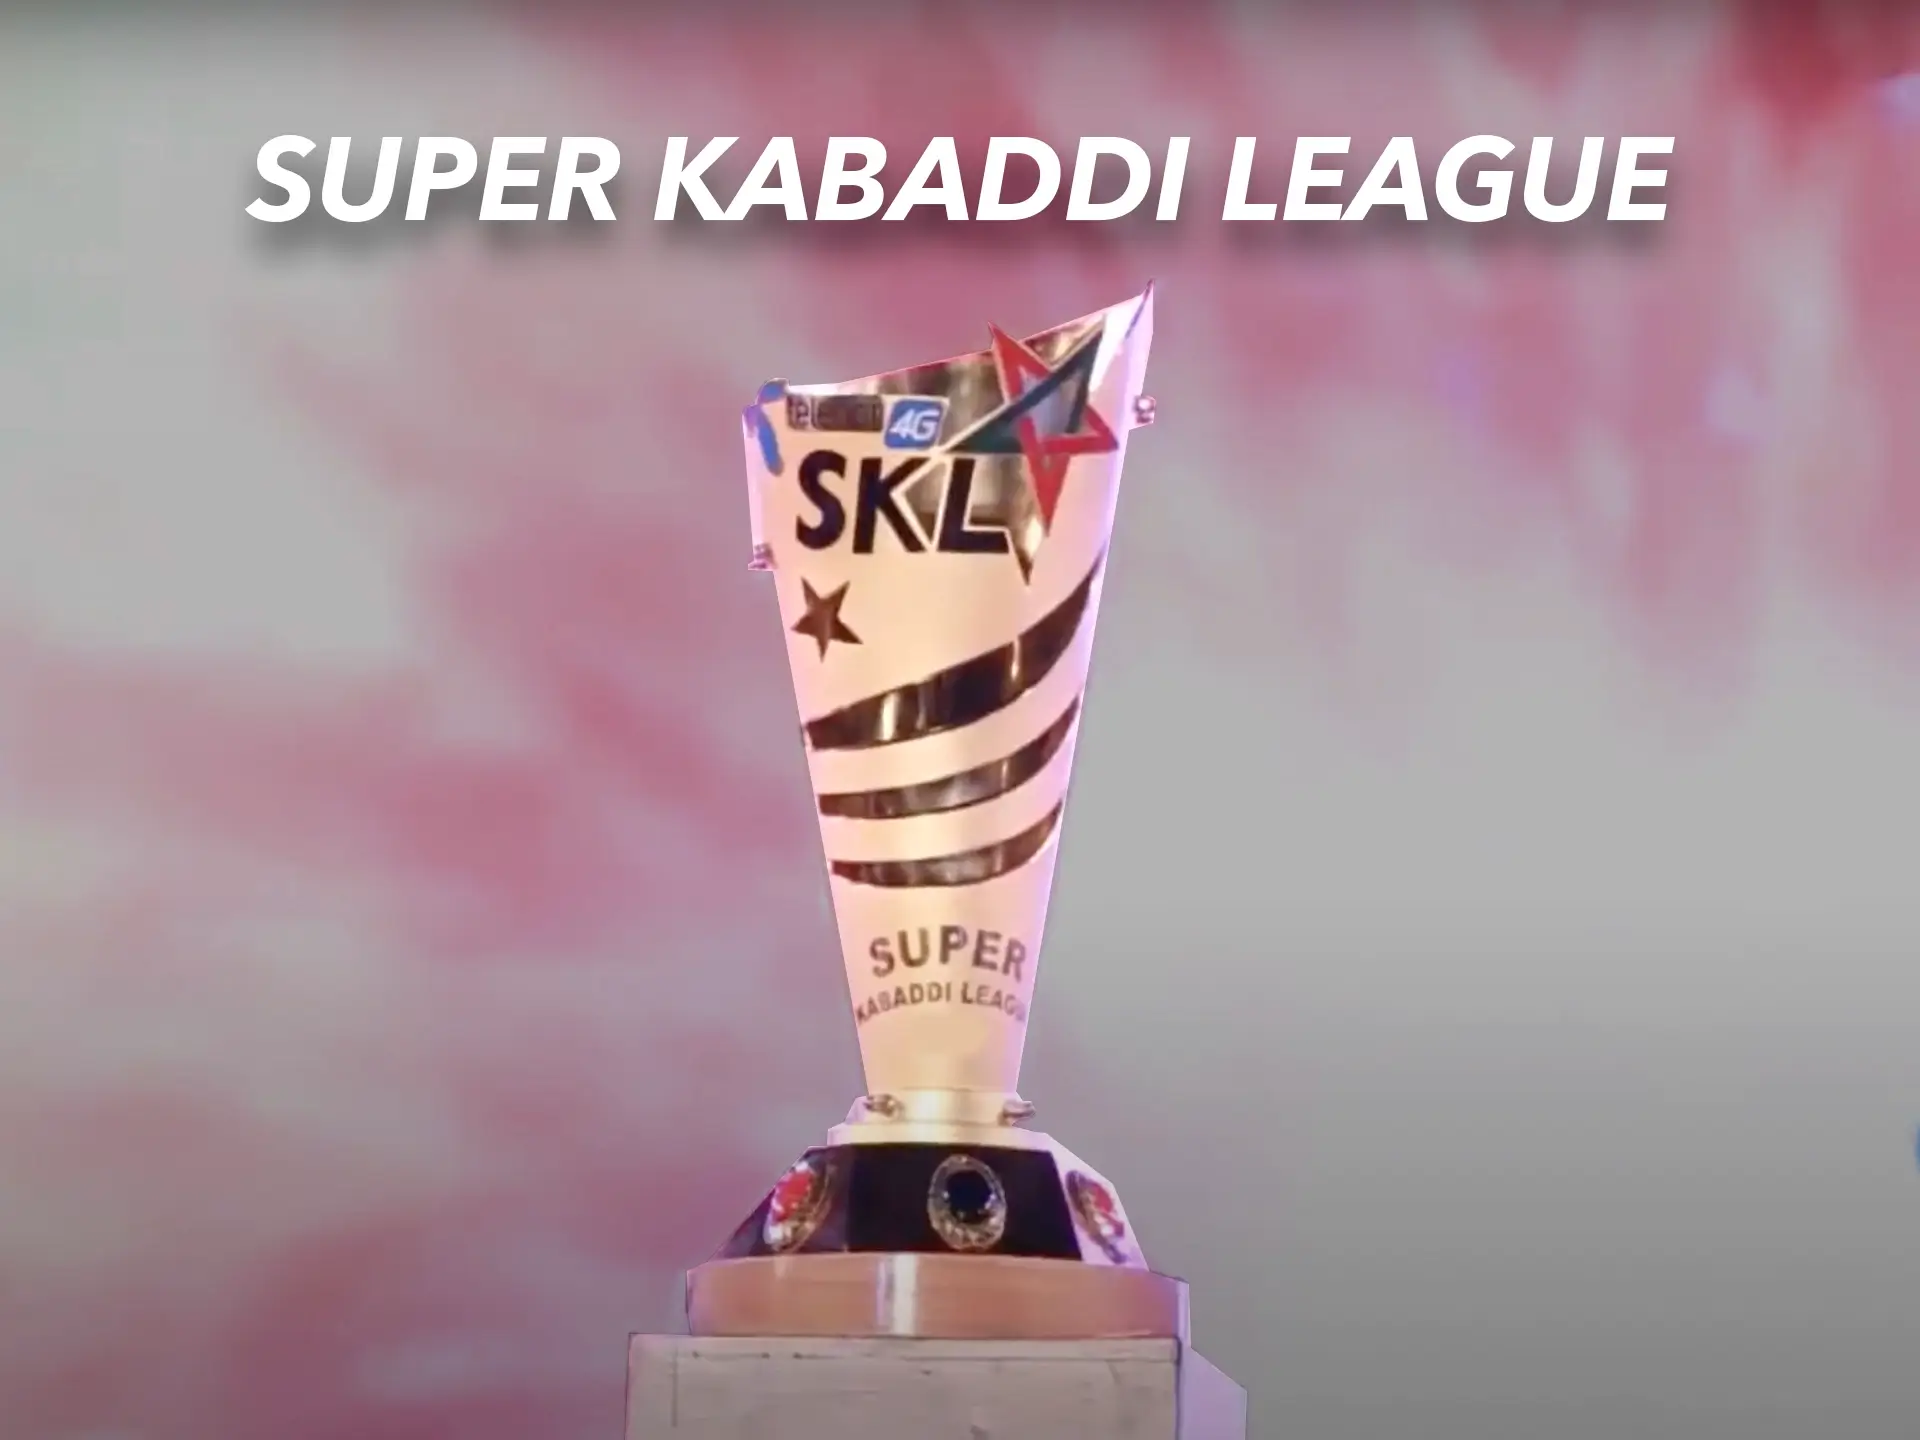 Make outcomes on Super Kabaddi League.